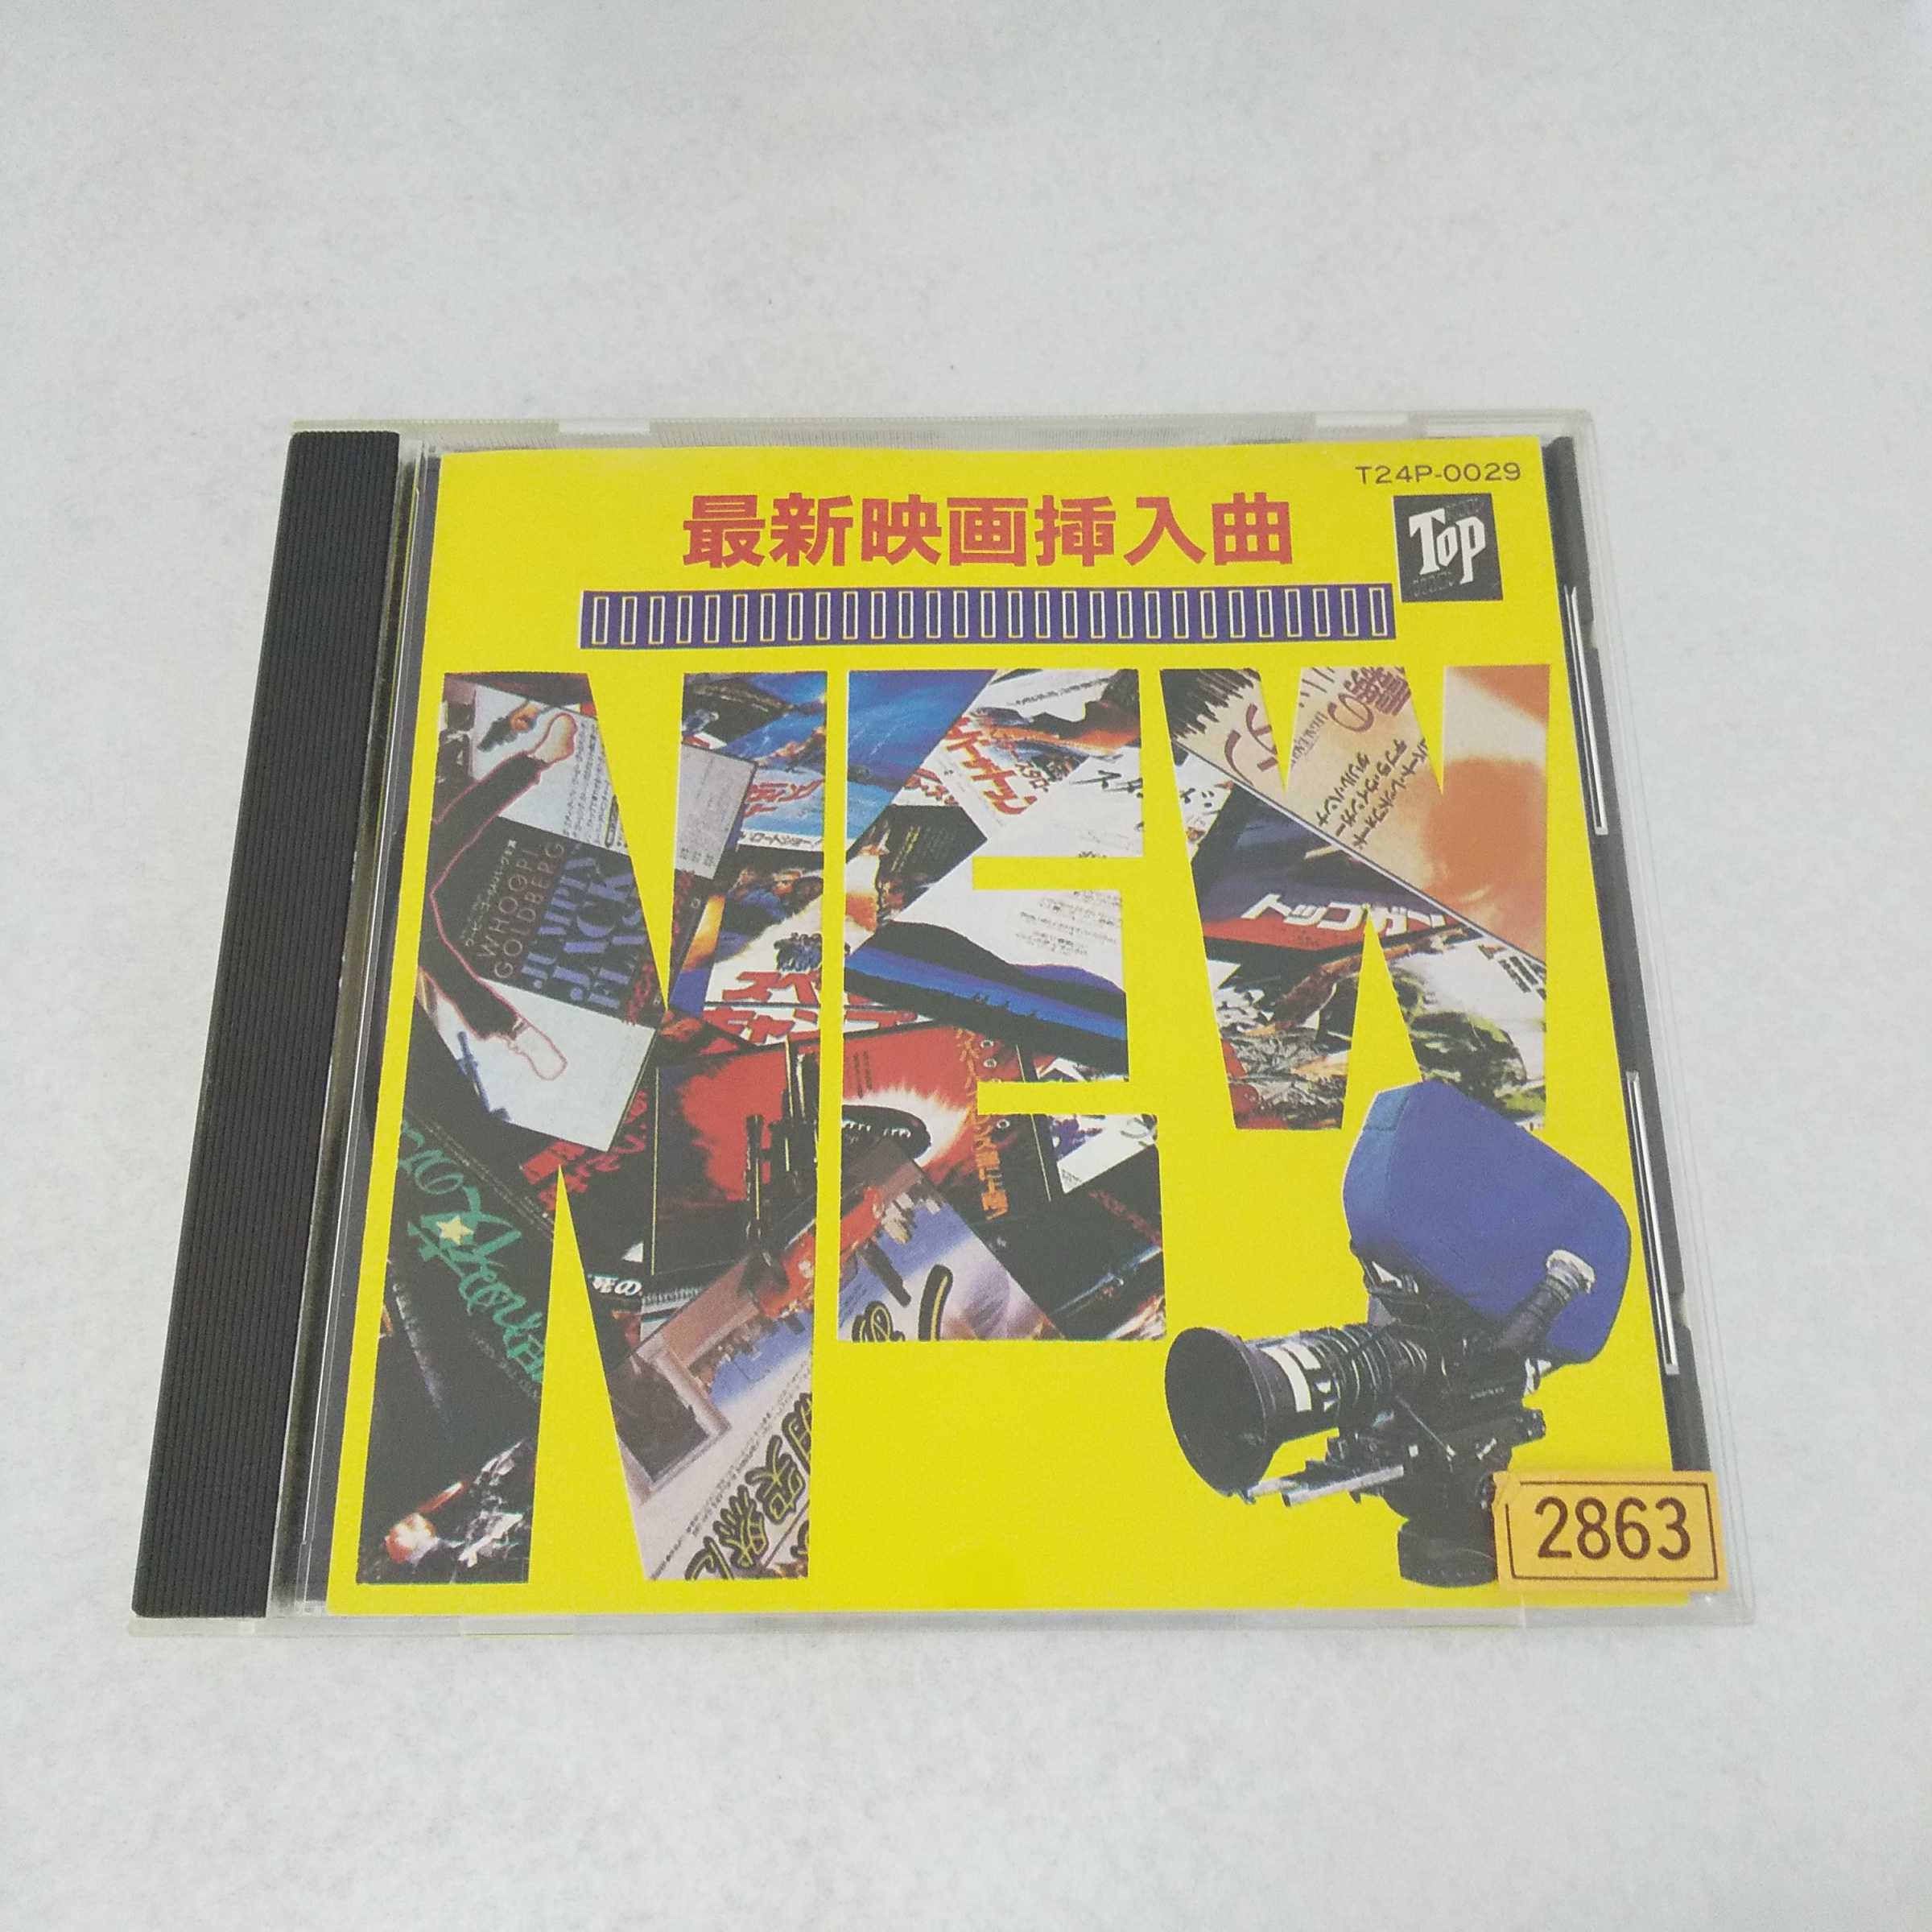 AC07999 【中古】 【CD】 スクリーン・ミュージック/オムニバス